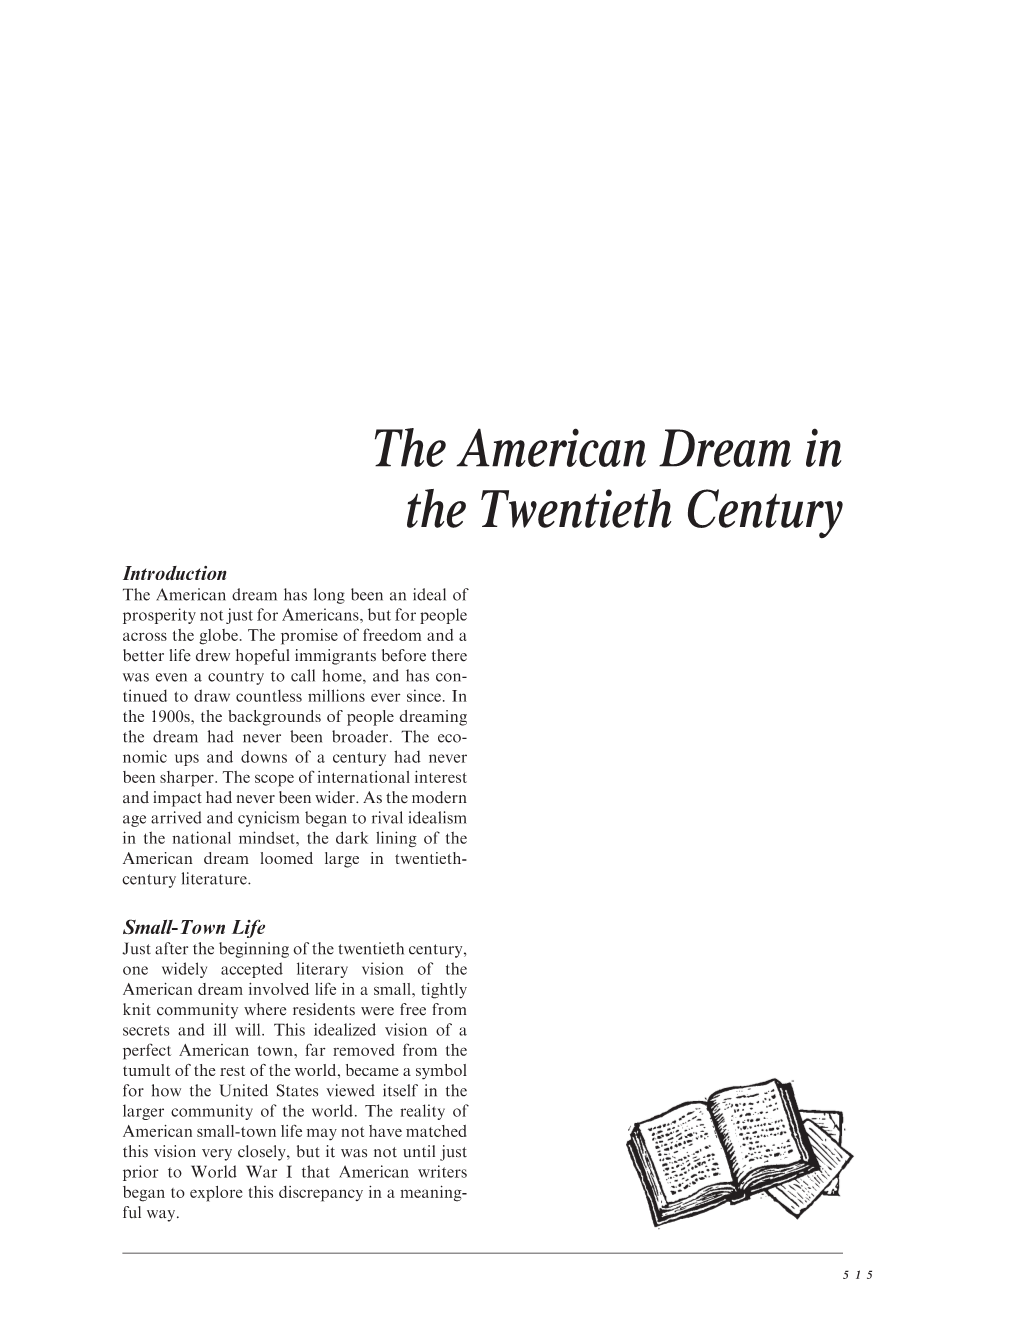 The American Dream in the Twentieth Century